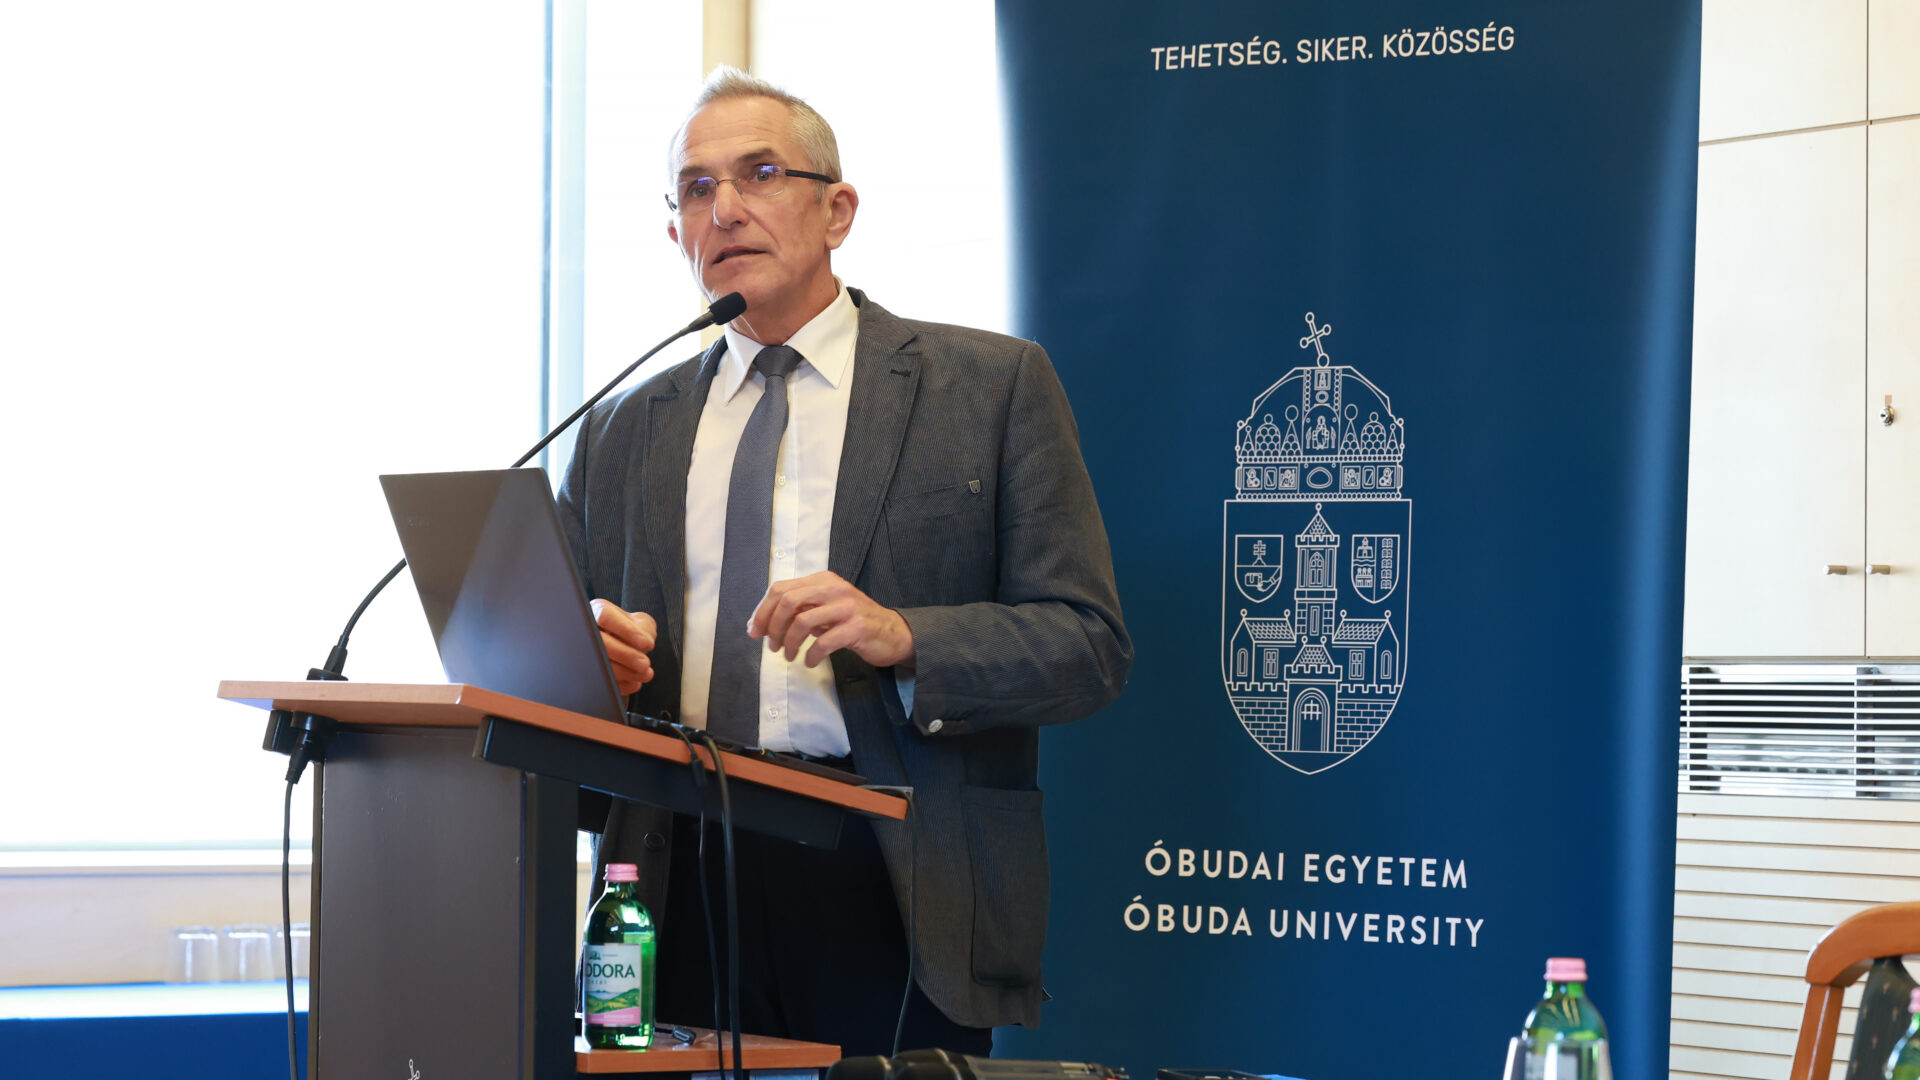 Prof. Dr. László Gulácsi, scientific deputy rector at Obuda University